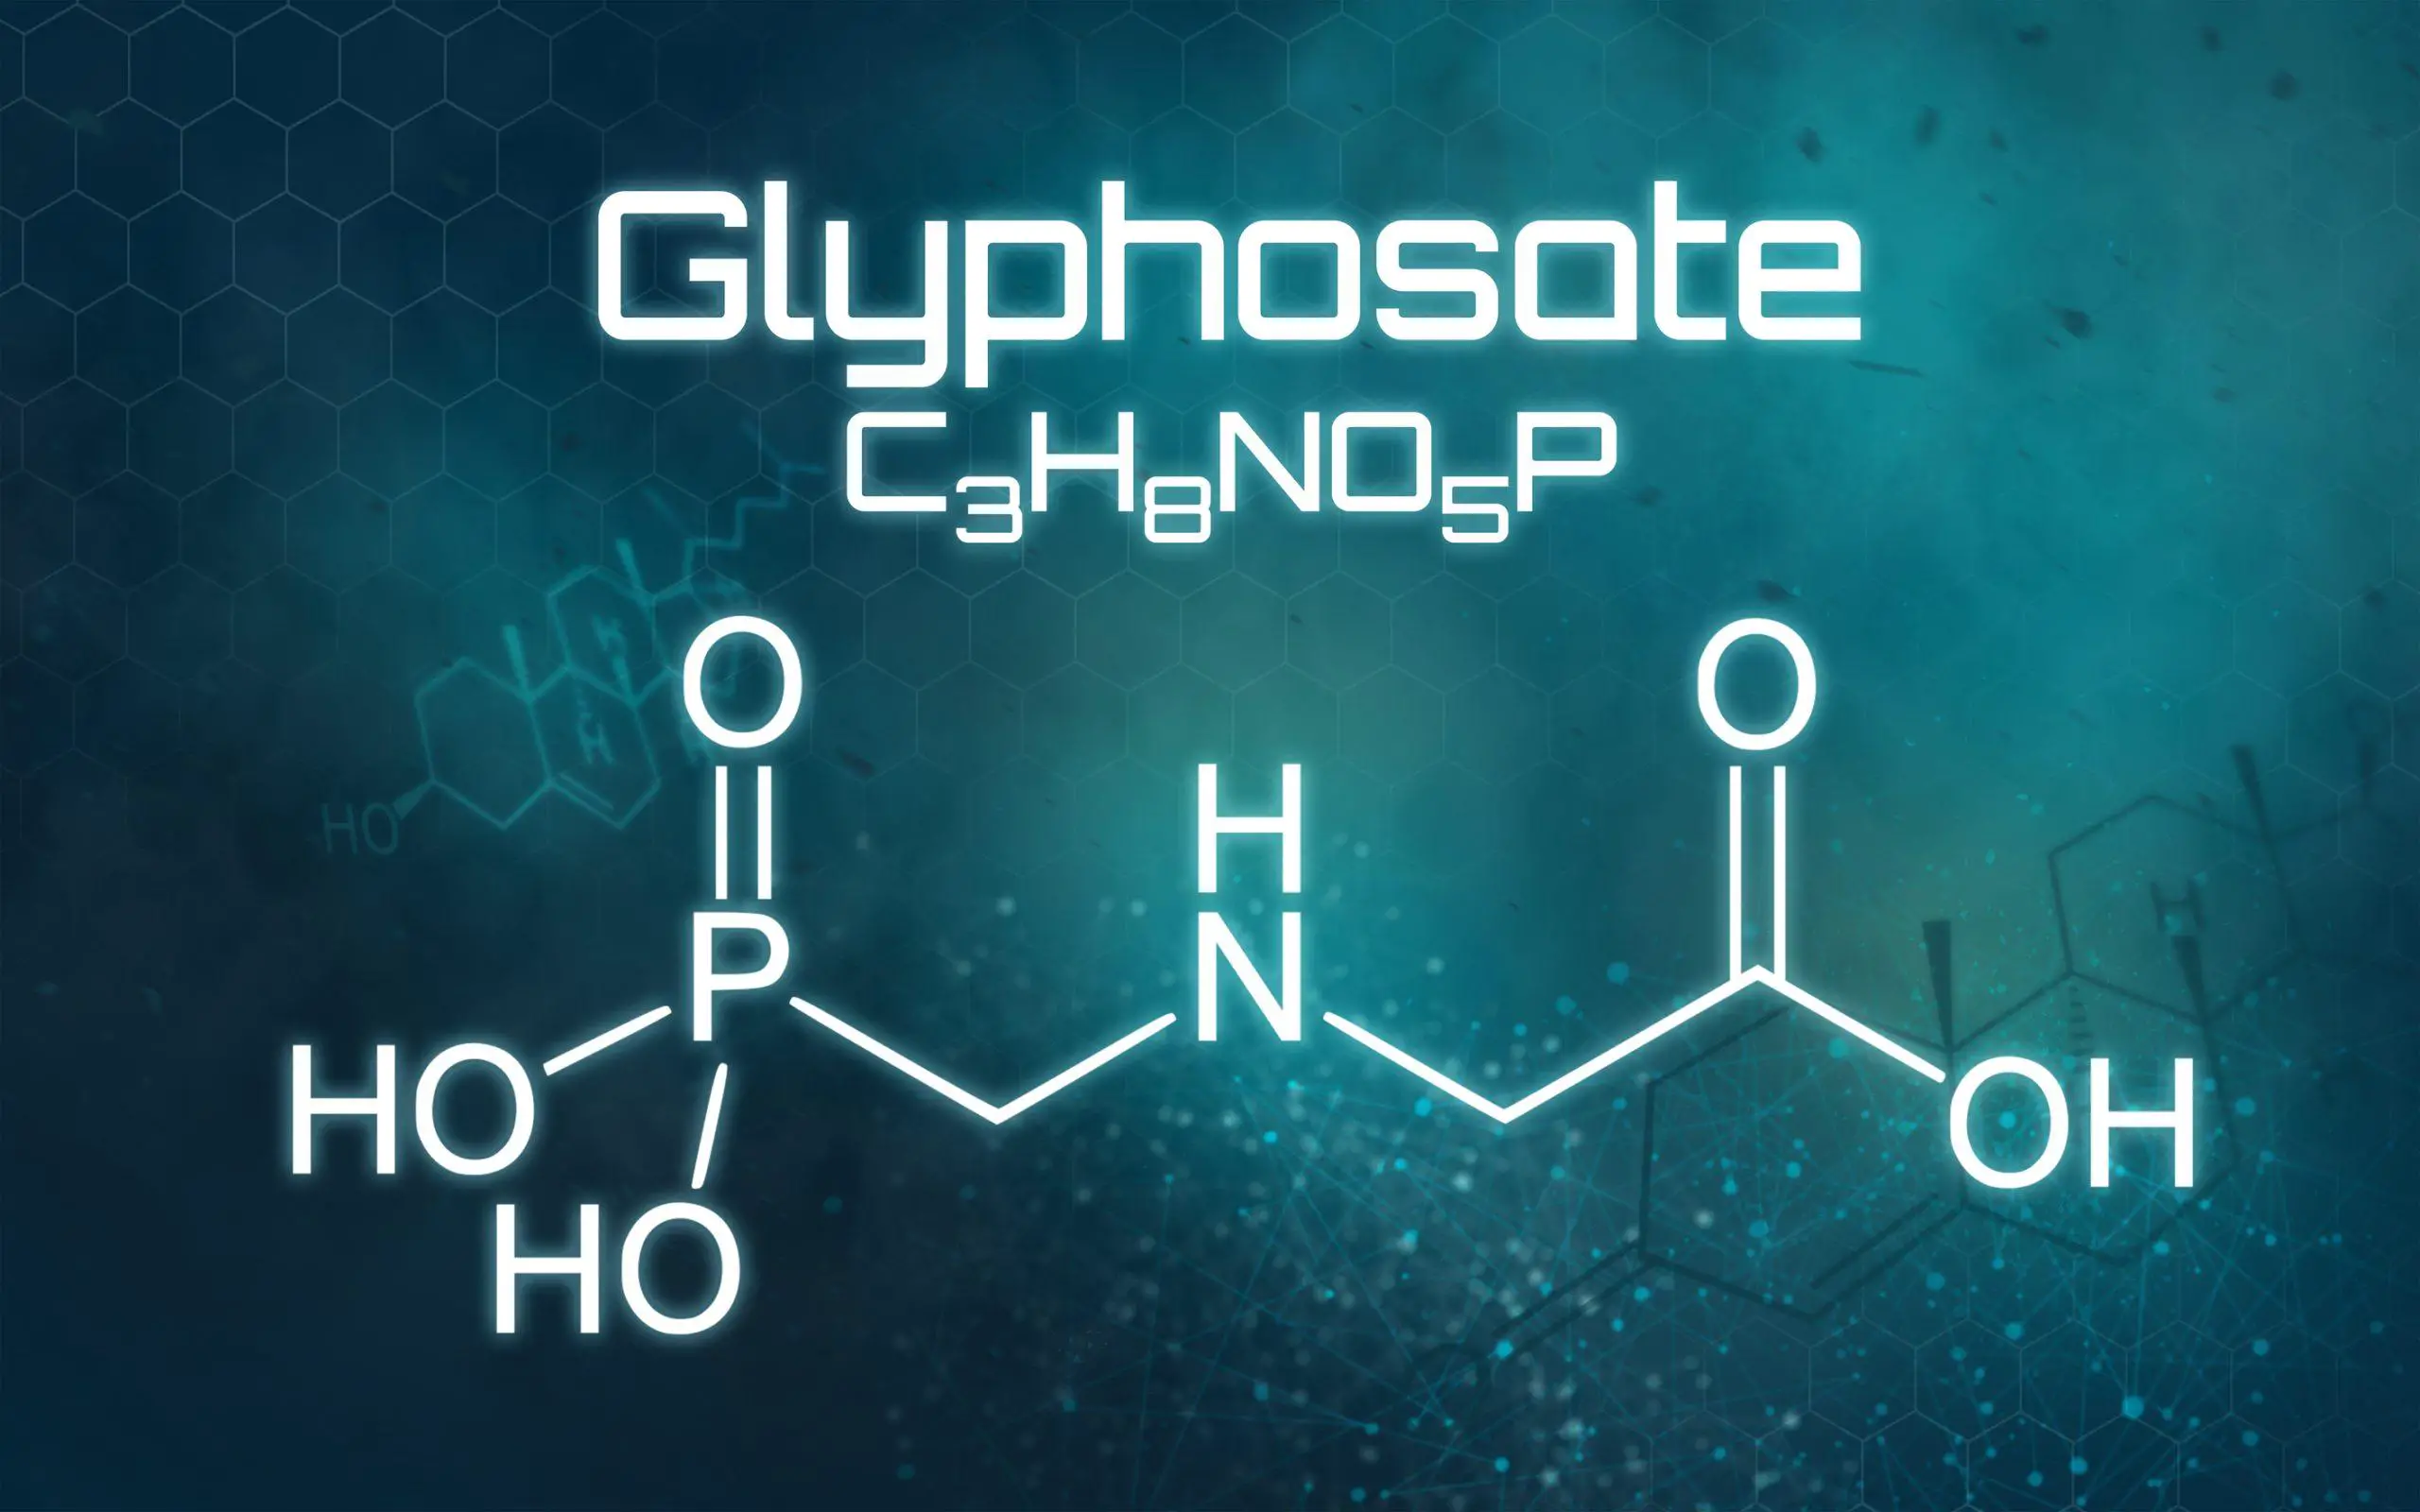 The chemical formula of Glyphosate